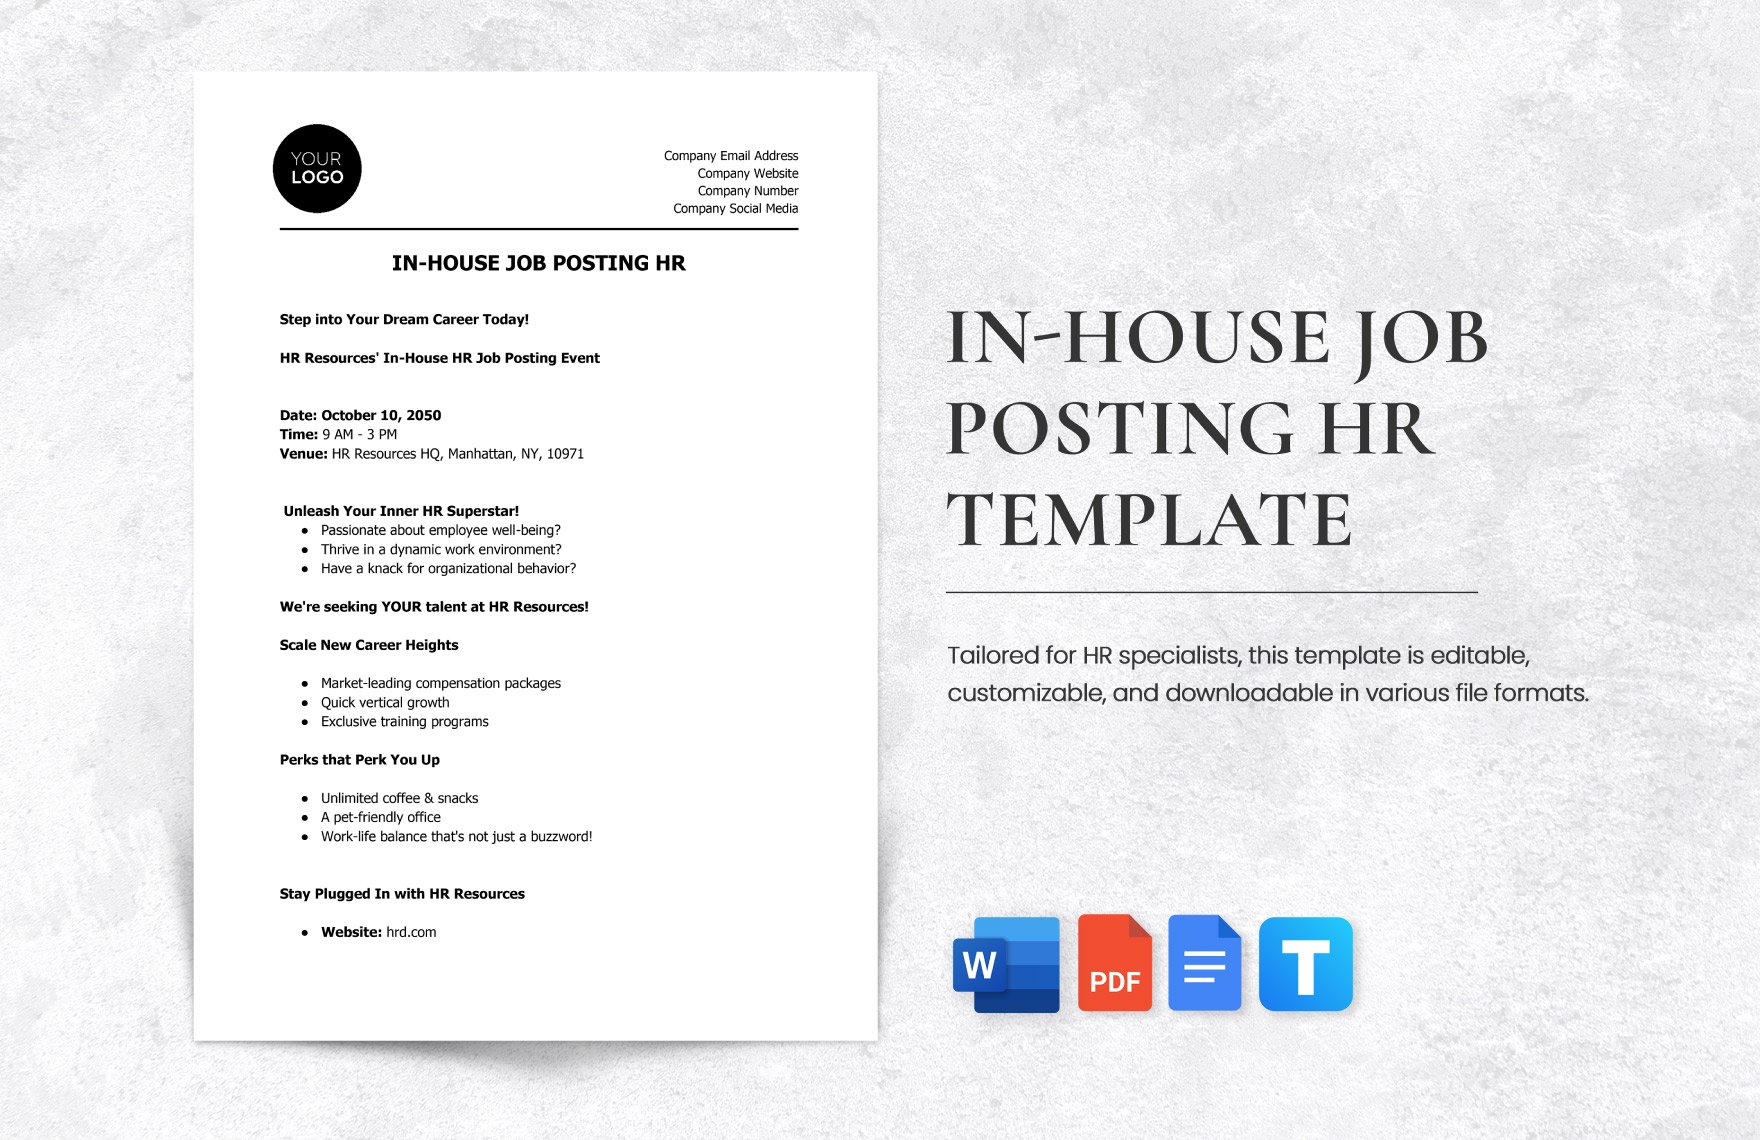 In-house Job Posting HR Template in Word, Google Docs, PDF